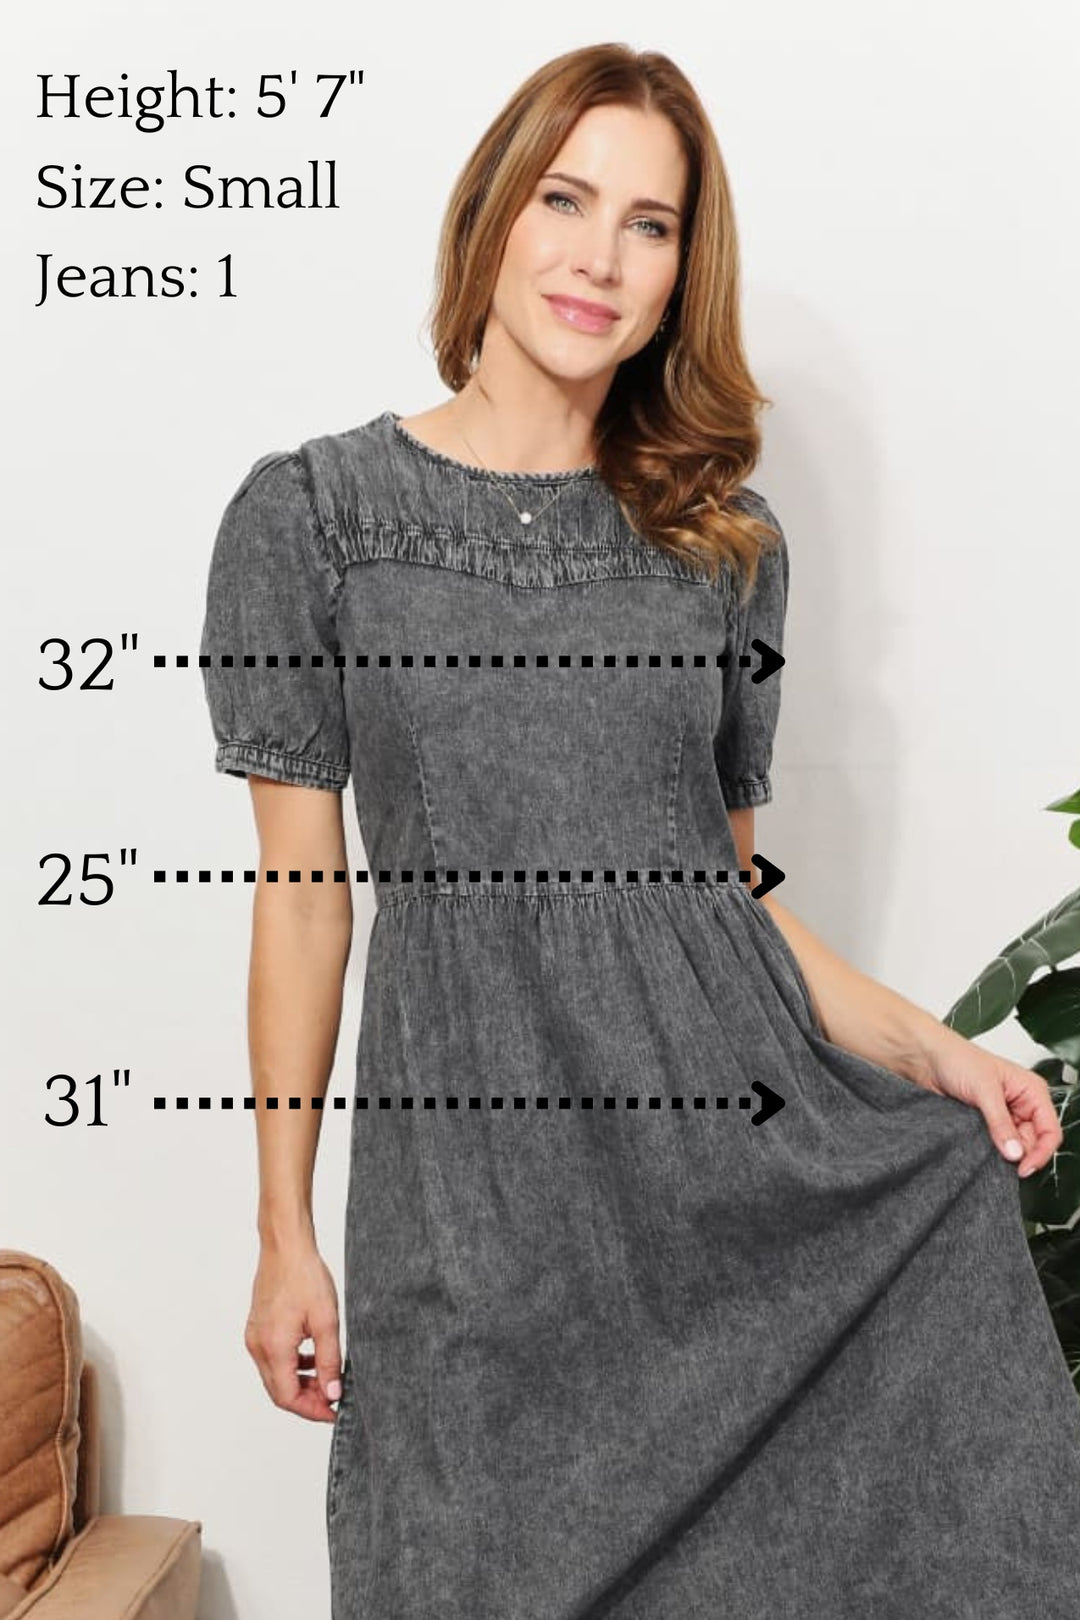 Model Jillian Measurements: Height 5'7", Size Small, Jeans Size 1, Bust 32", Waist 25", Hips 31"